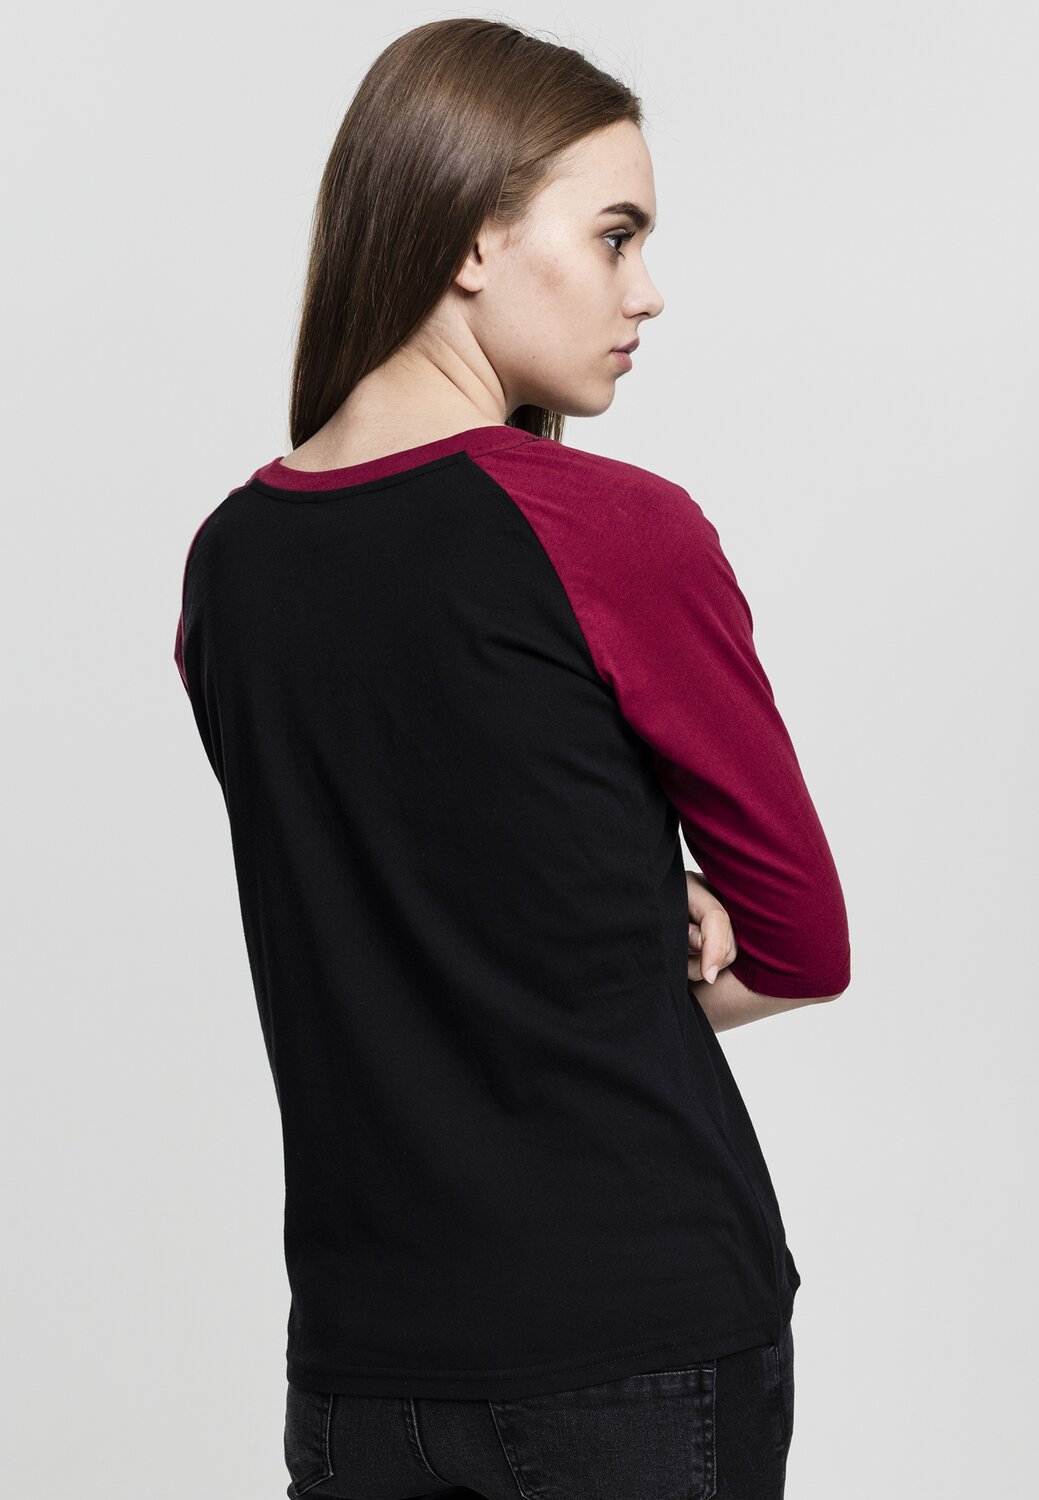 MAXISCOOT T-Shirt | 3/4 Contrast black/burgundy Ladies Raglan